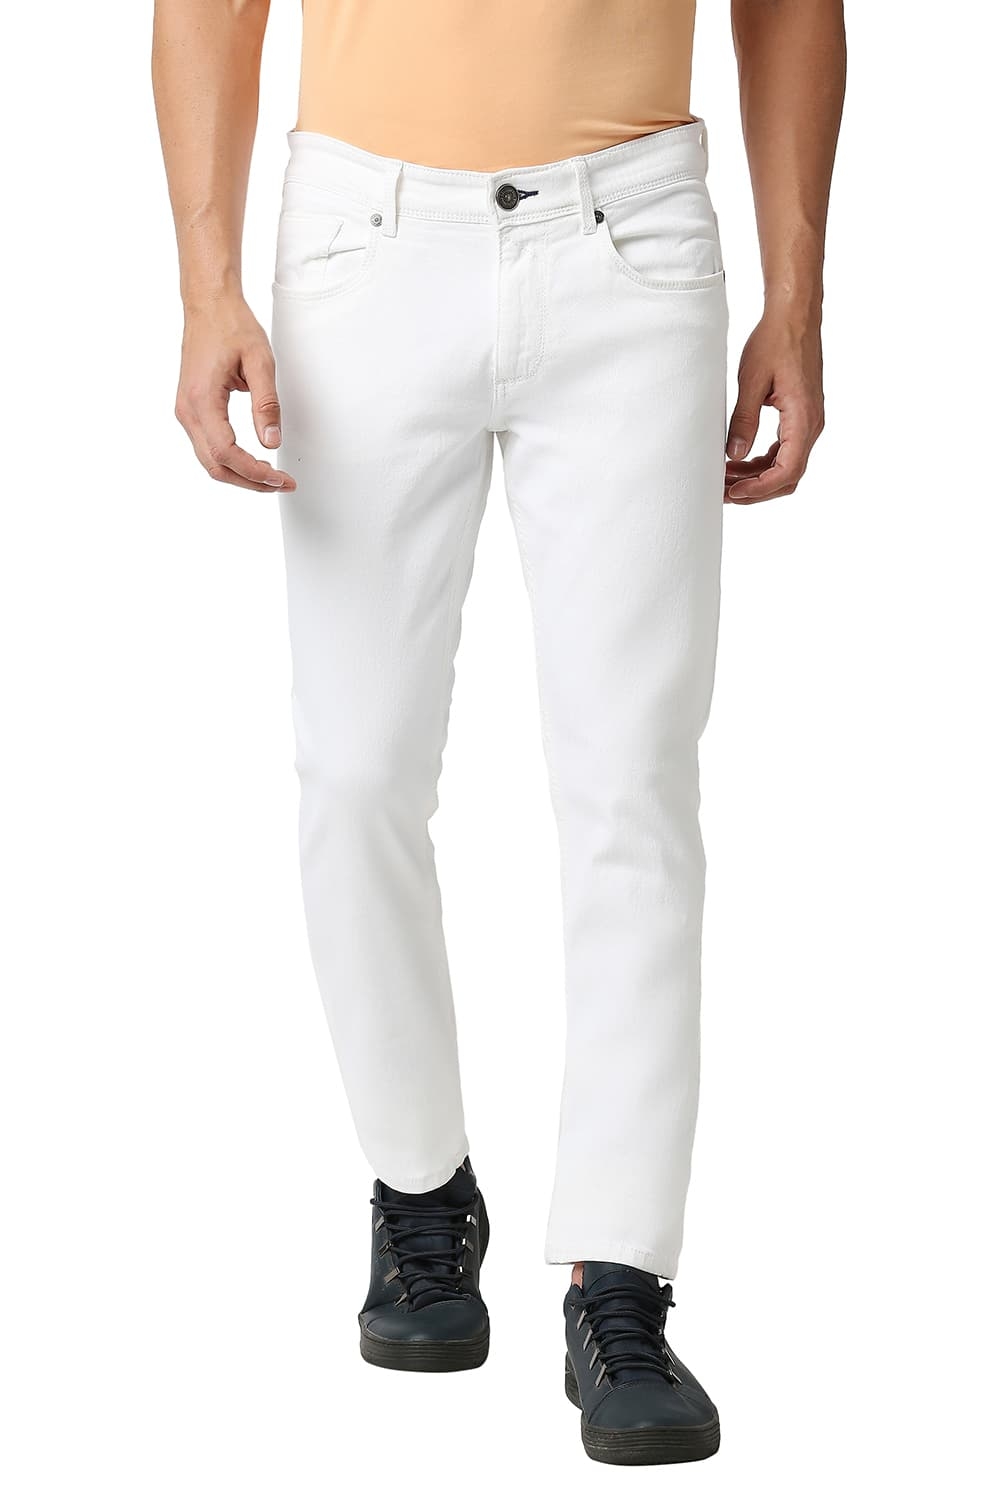 Basics | Men's White Cotton Blend Solid Jeans 0